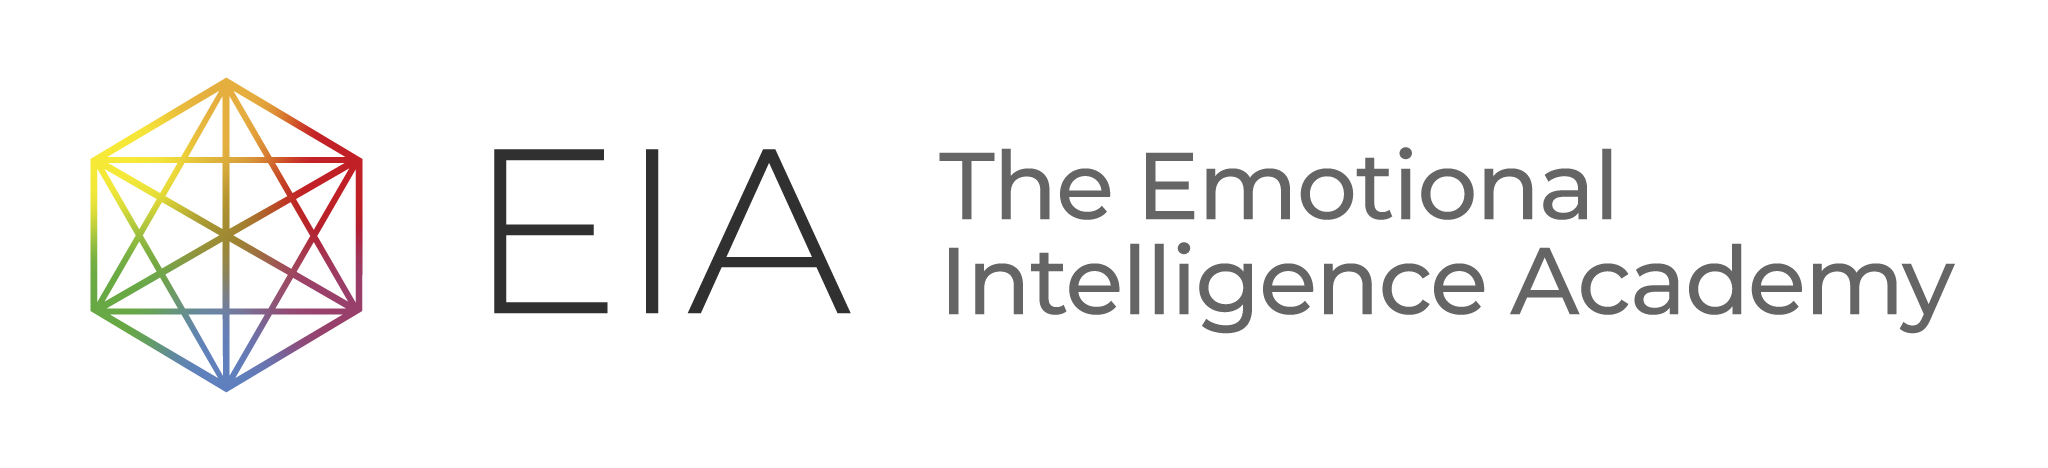 EIA logo - long